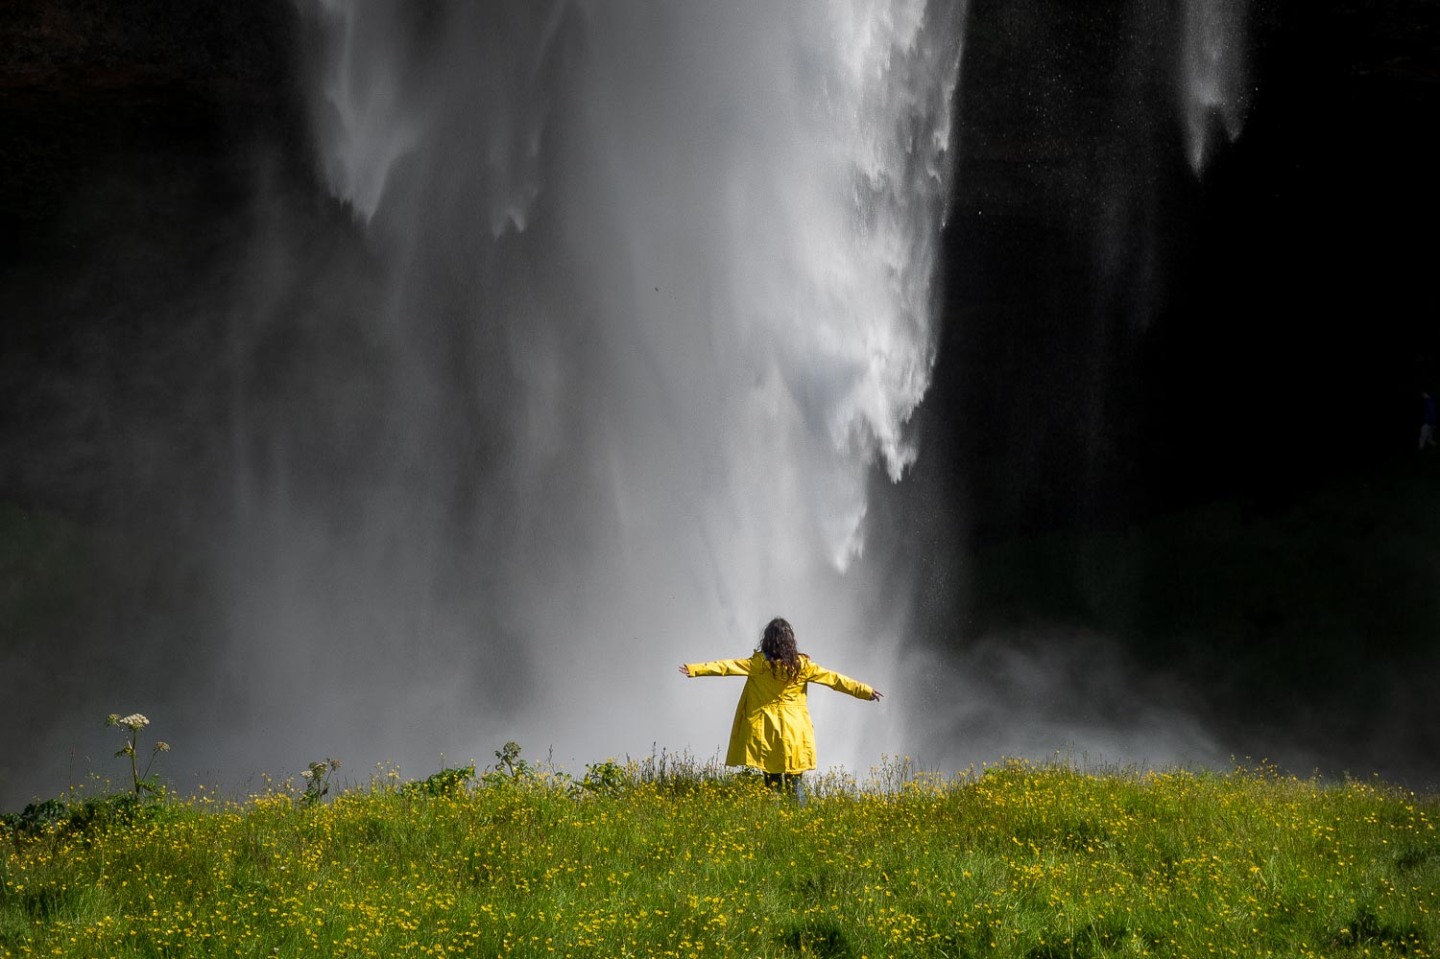 A girl standing under the waterfall, Seljalandfoss, Iceland.